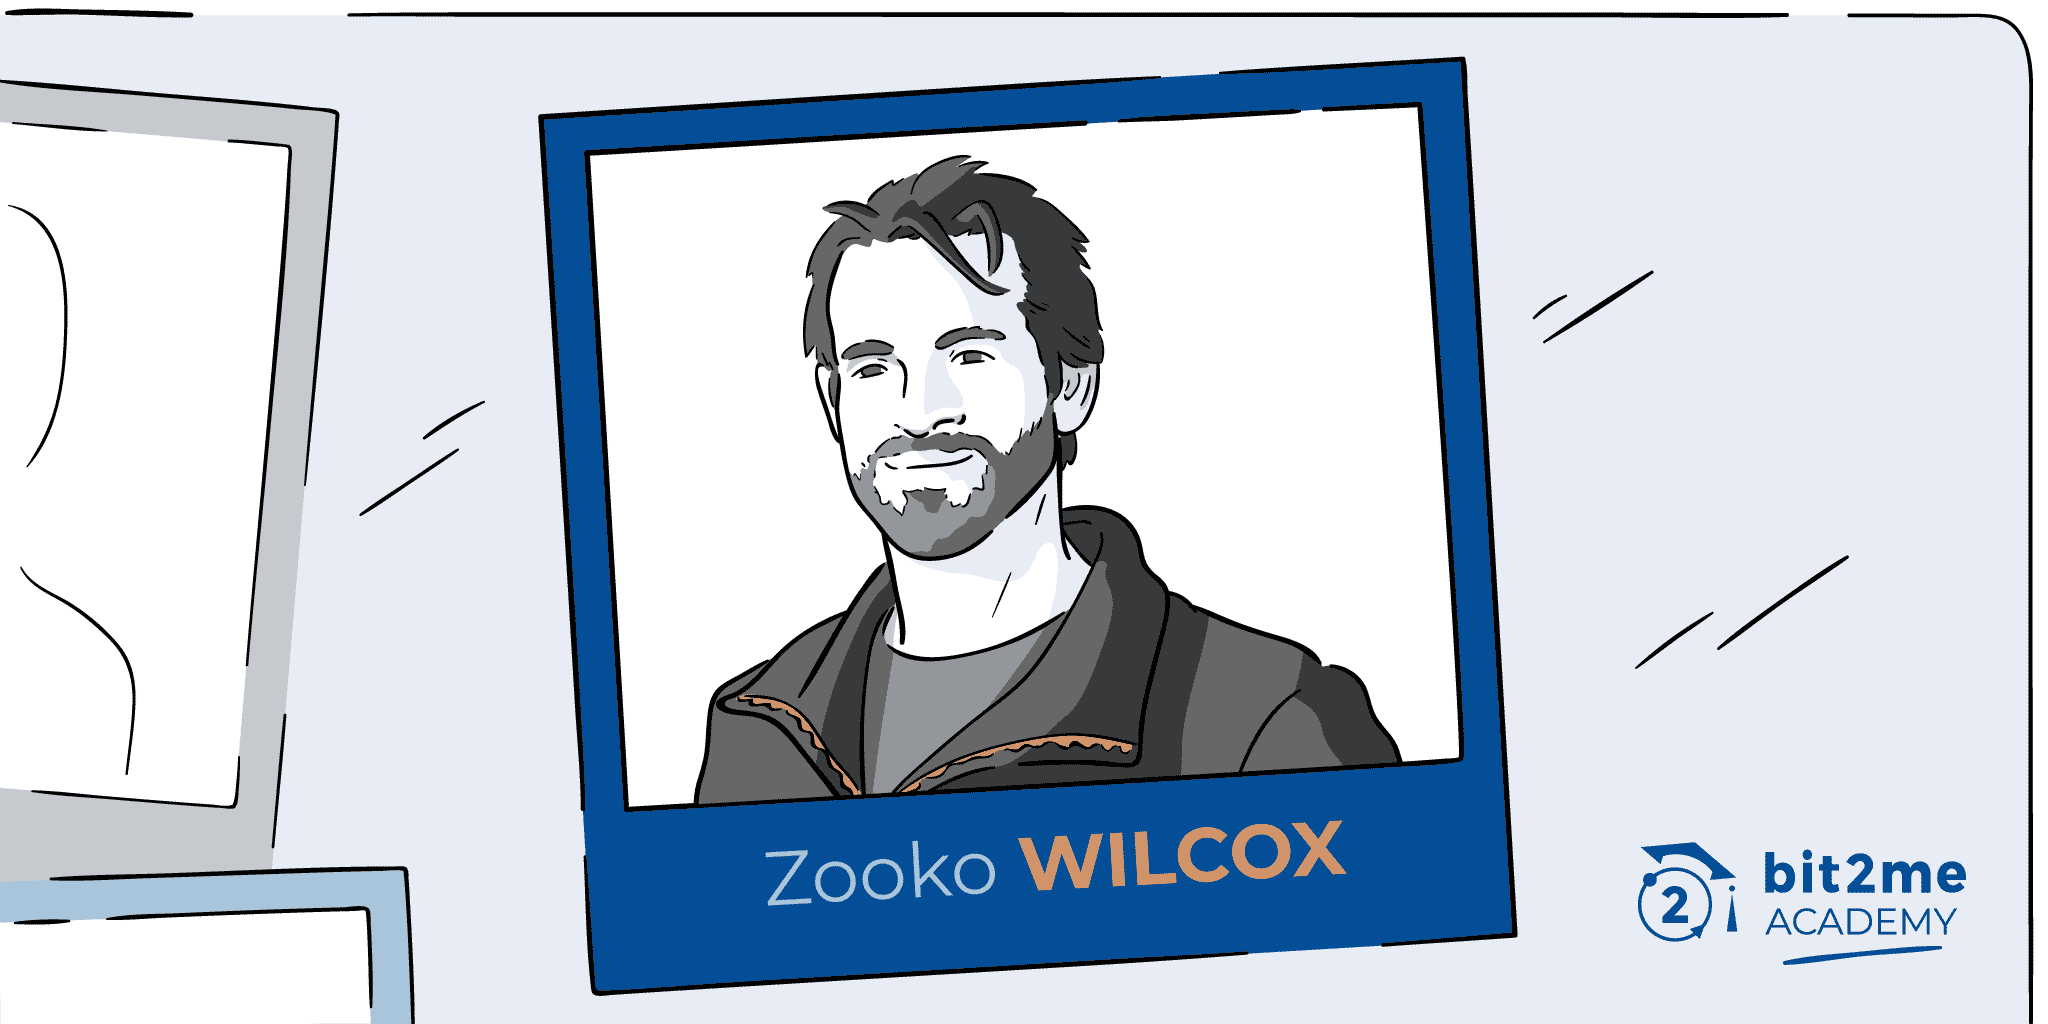 who is zooko wilcox